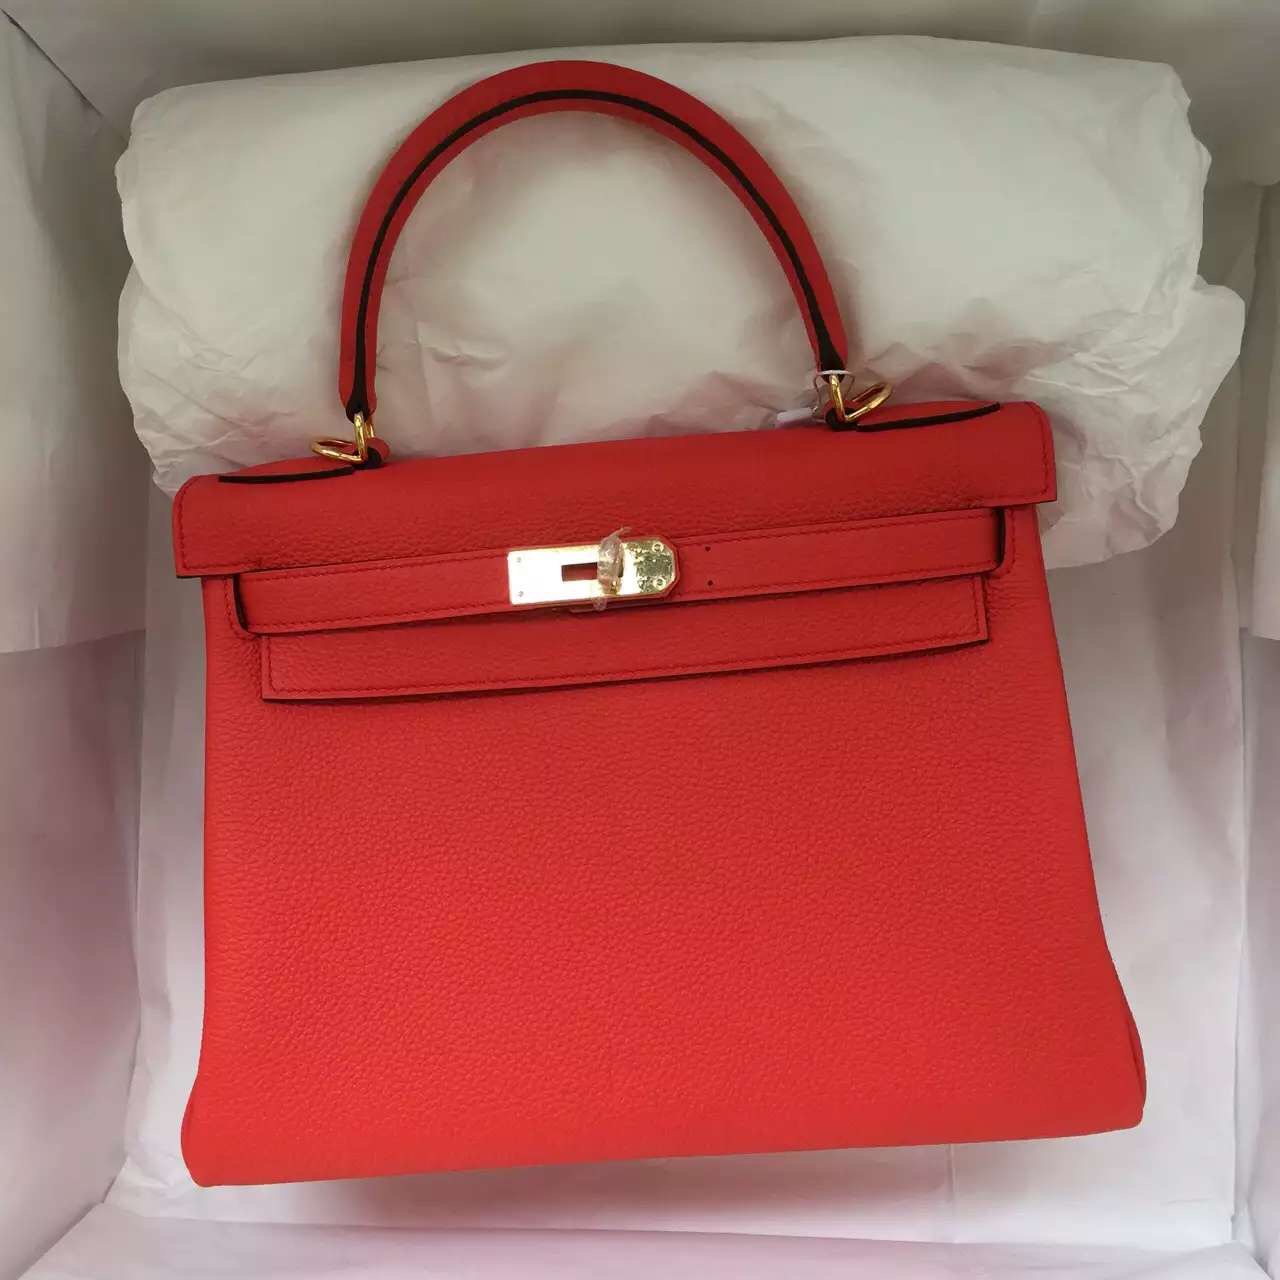 red hermes kelly bag, where are brighton handbags made